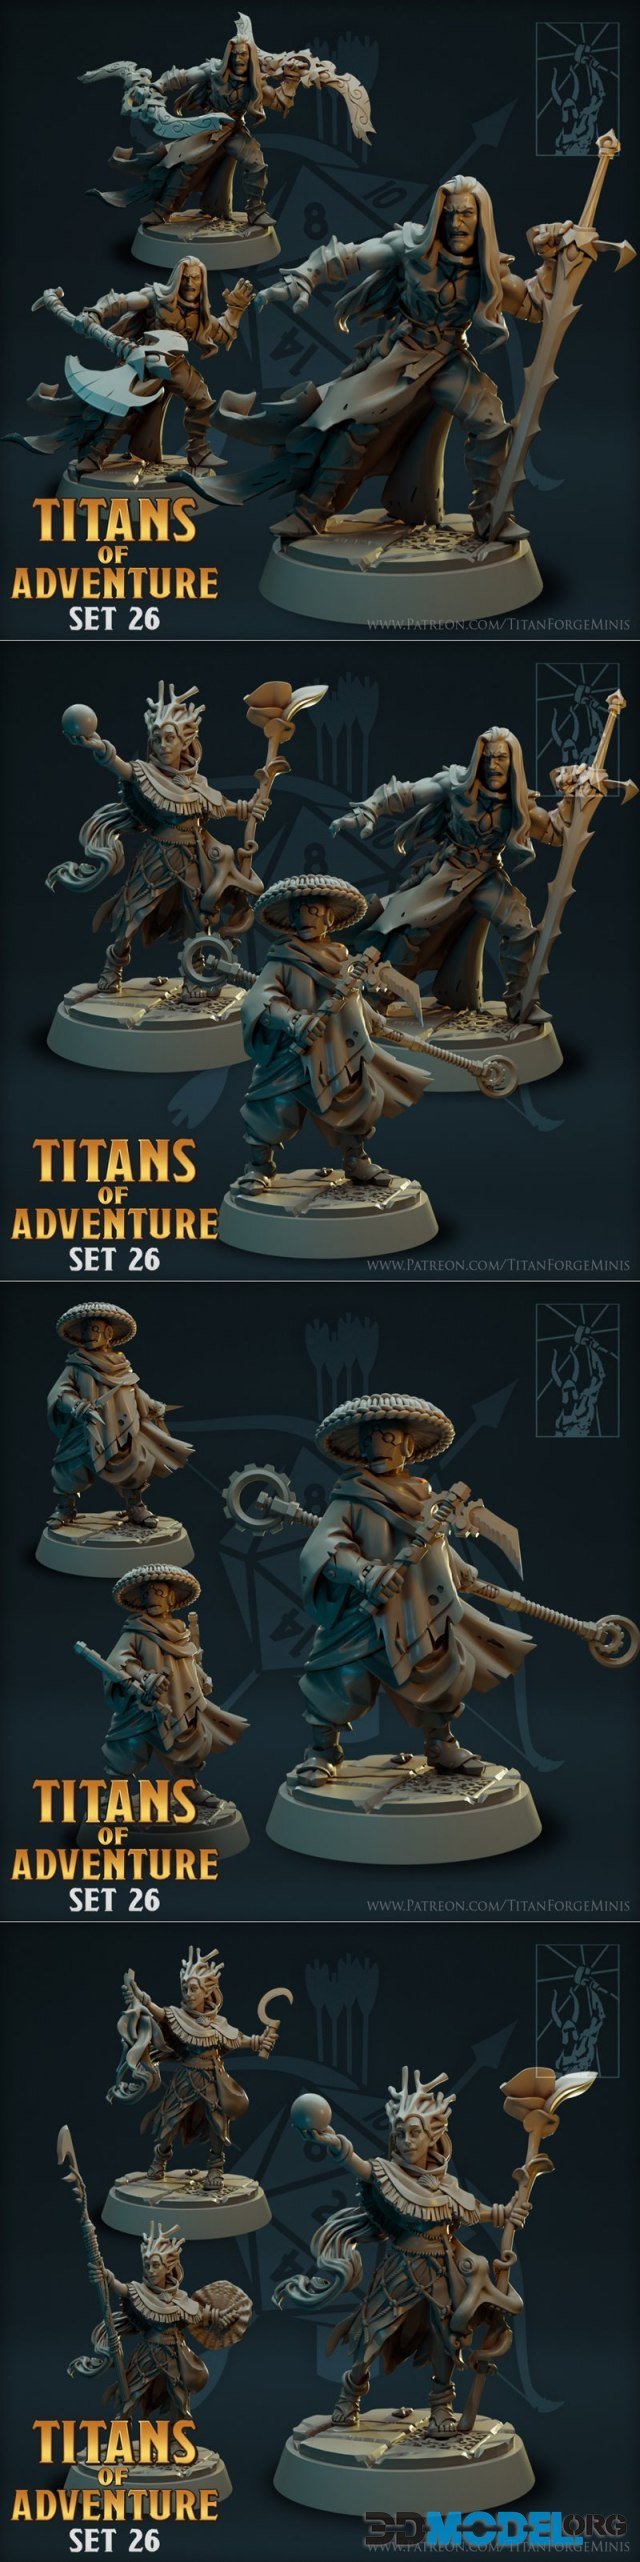 Titans of Adventure Set 26 – Printable